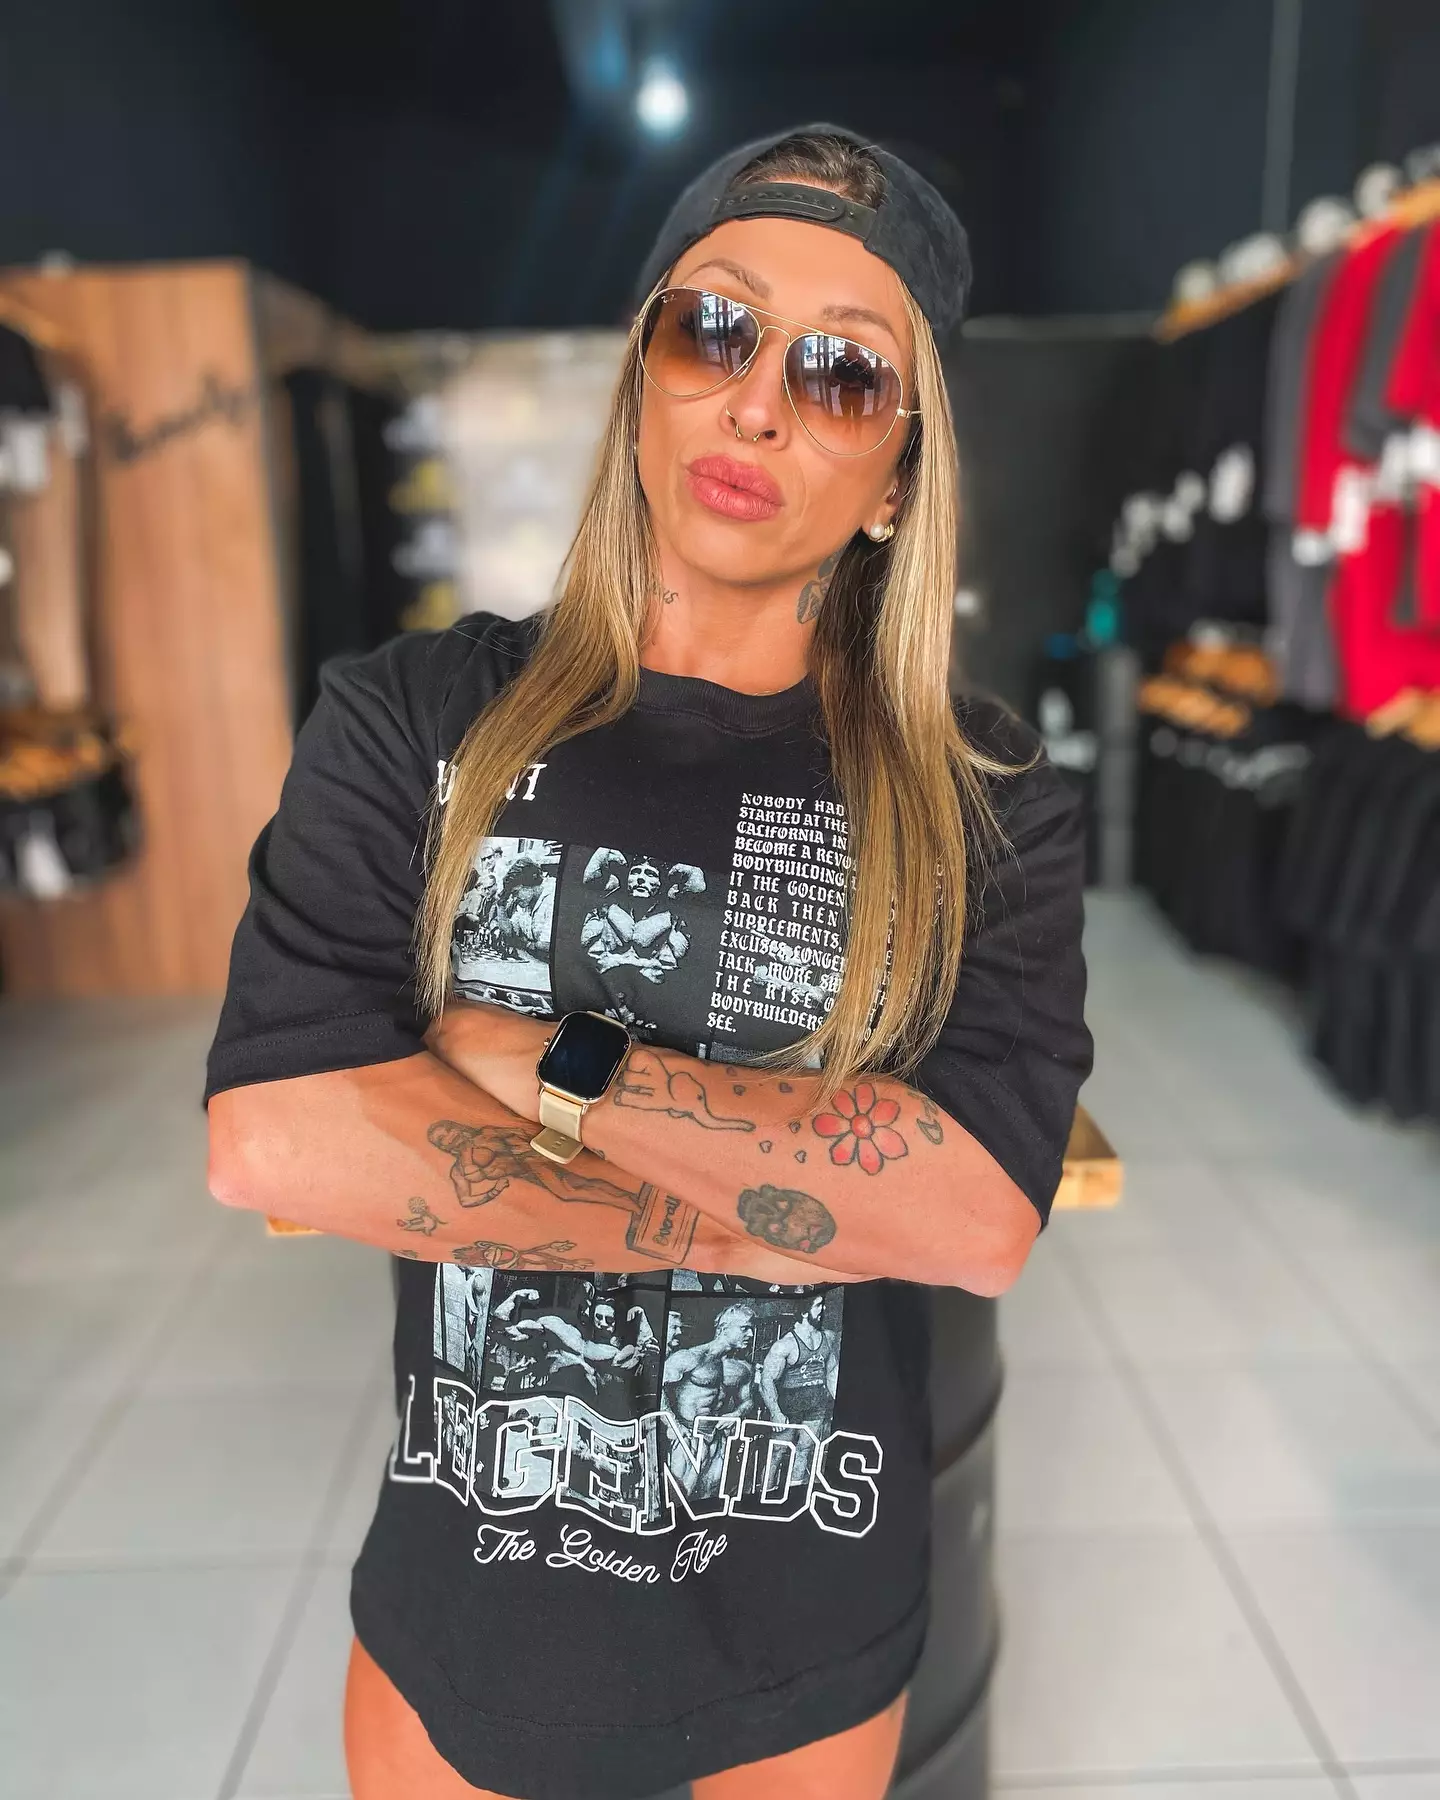 Brazilian bodybuilder Cíntia Goldani has died. (@cintiagoldanipro/Instagram)